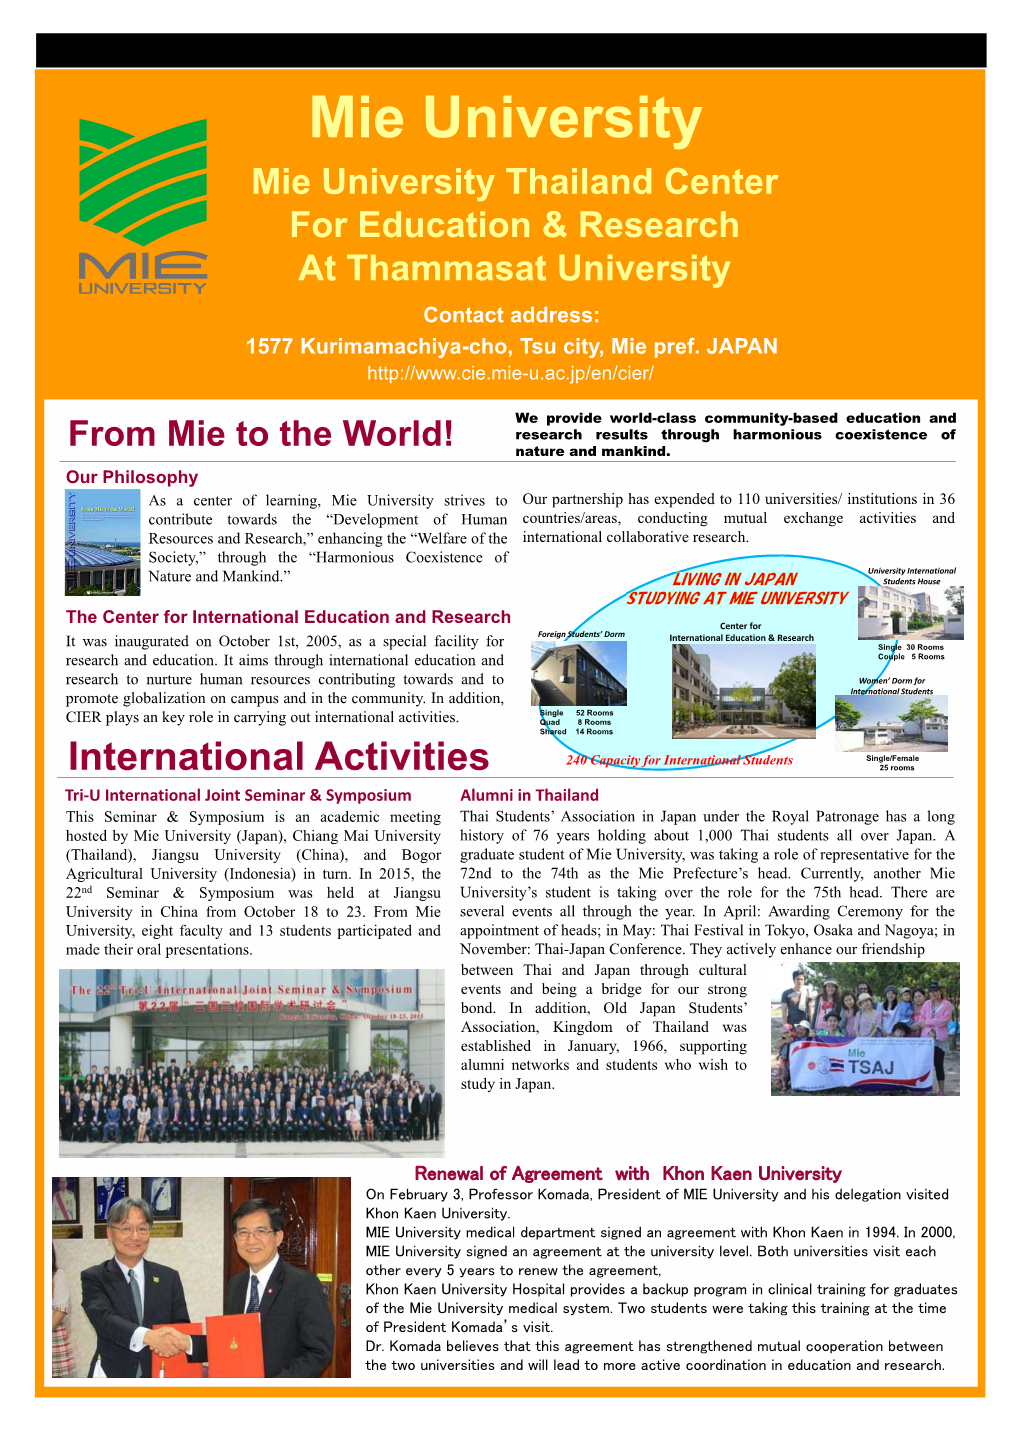 Mie University Mie University Thailand Center for Education & Research at Thammasat University Contact Address: 1577 Kurimamachiya-Cho, Tsu City, Mie Pref